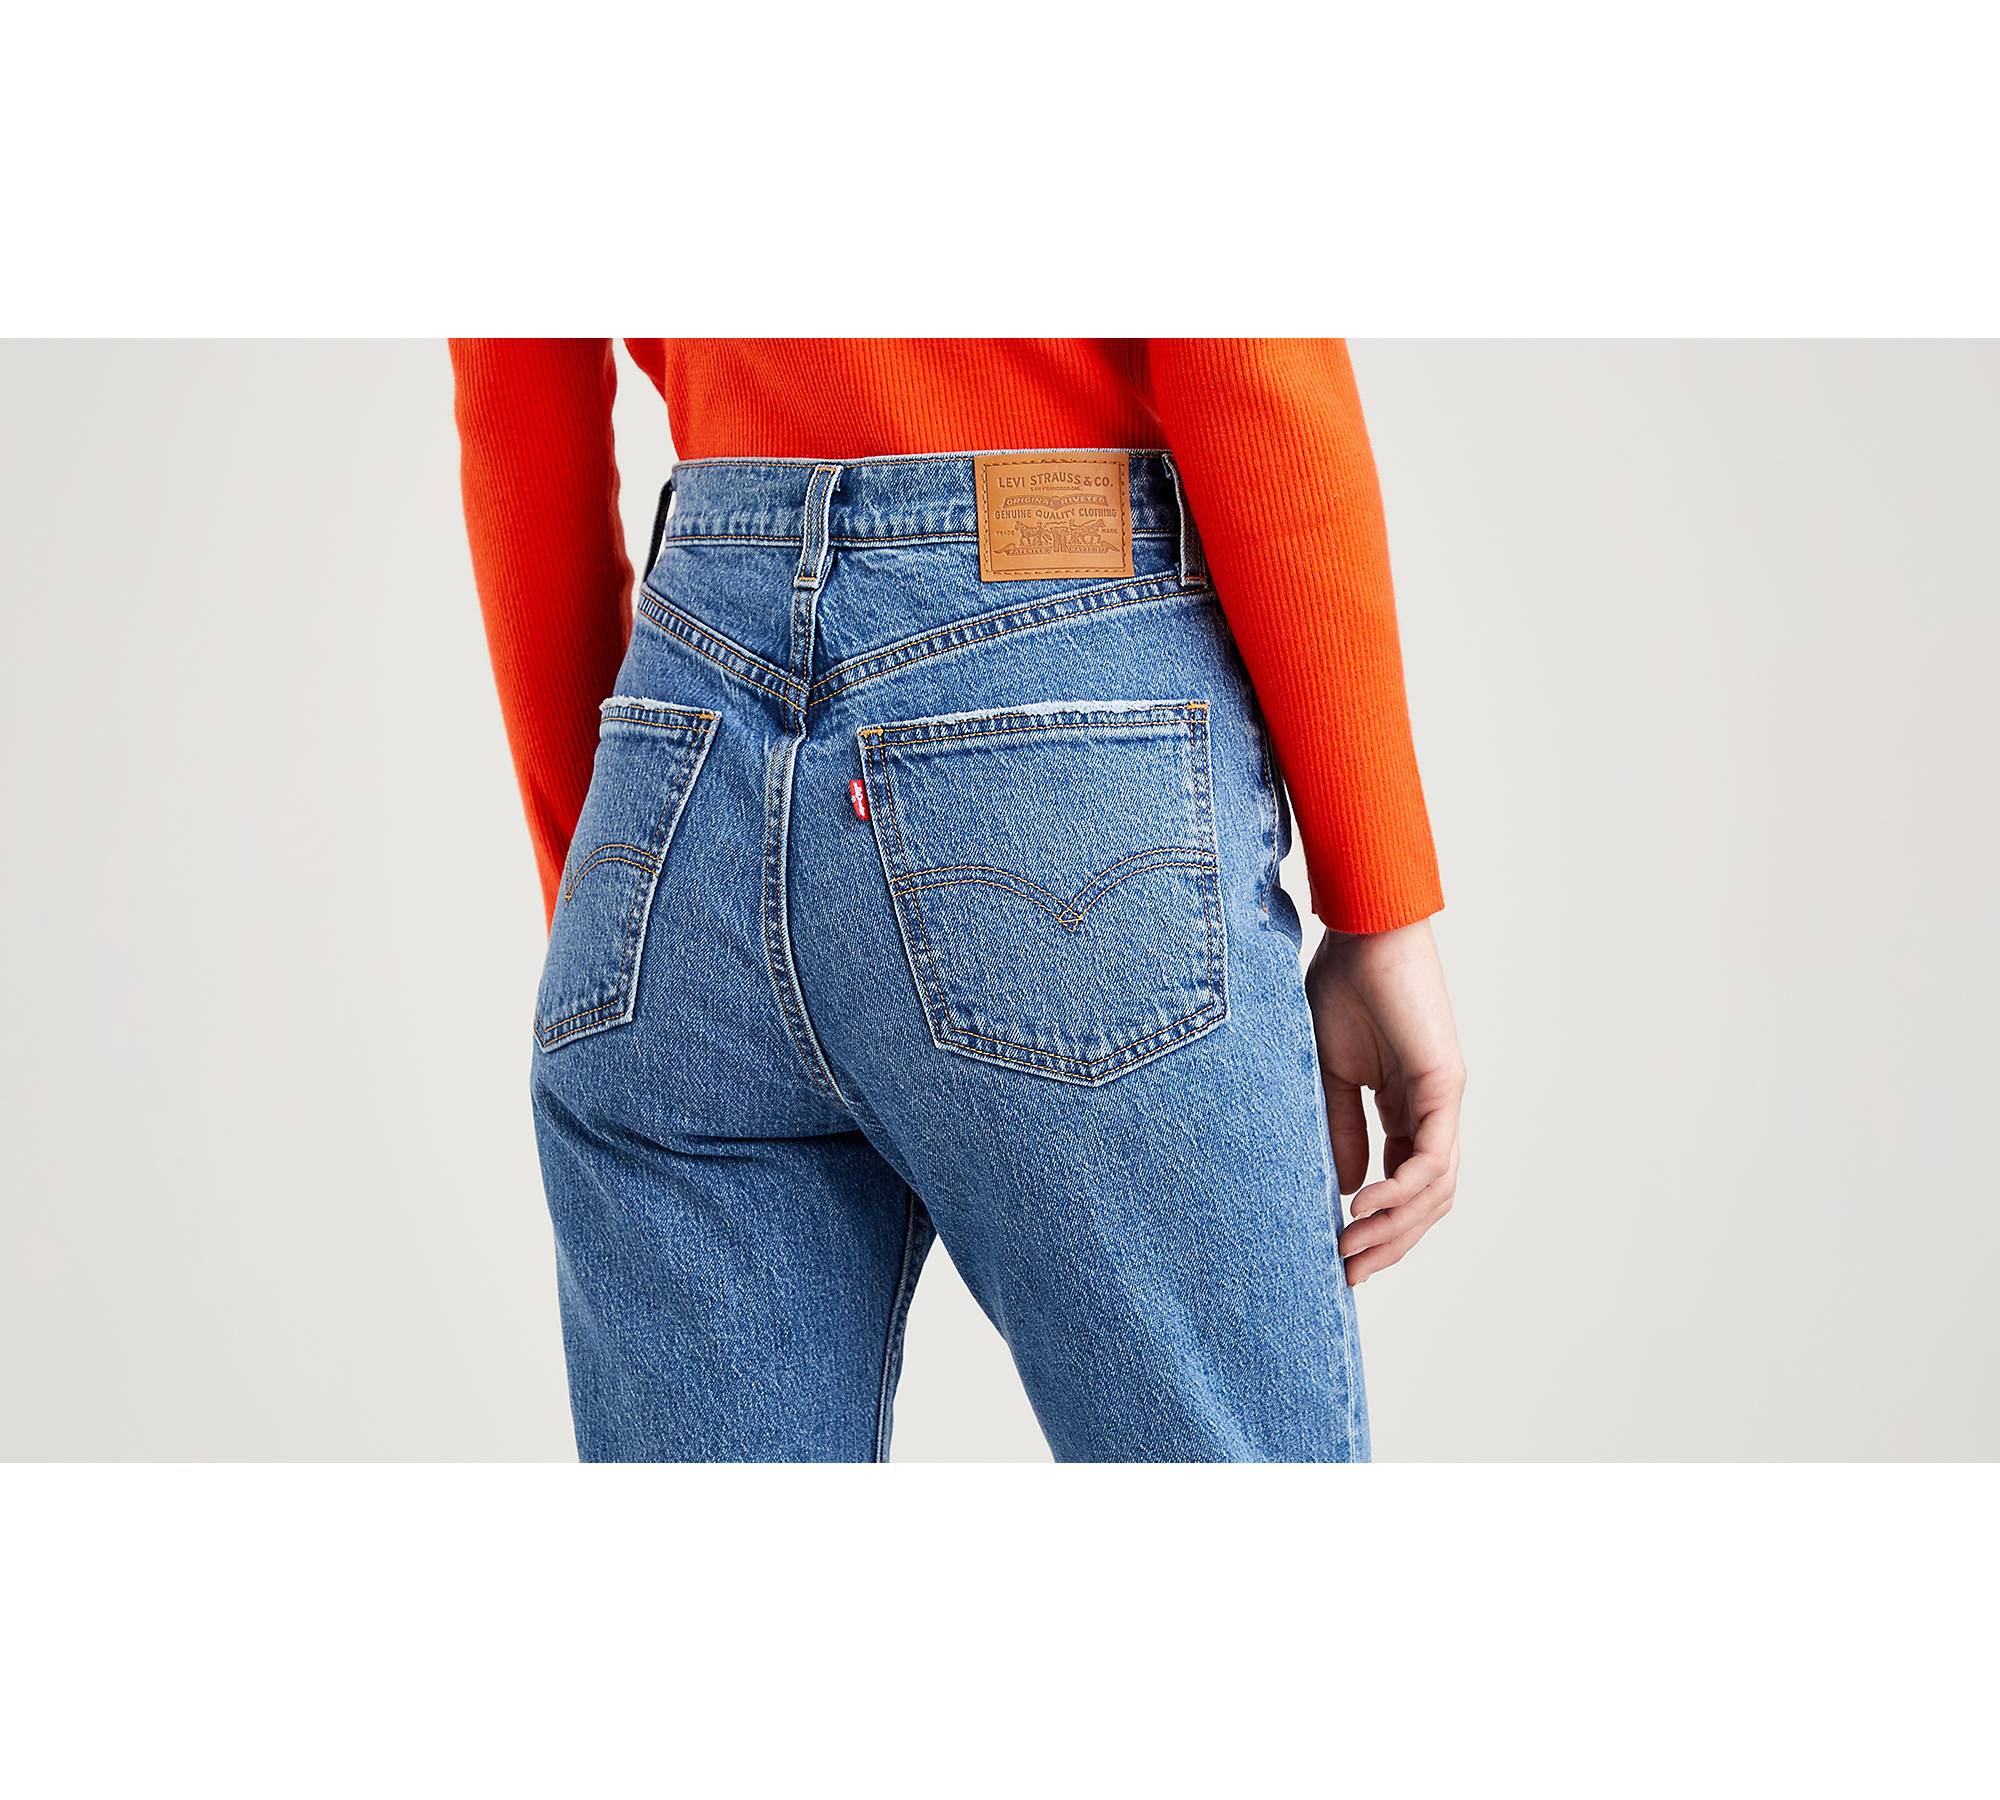 Sonoma original fit mid-rise straight leg jeans